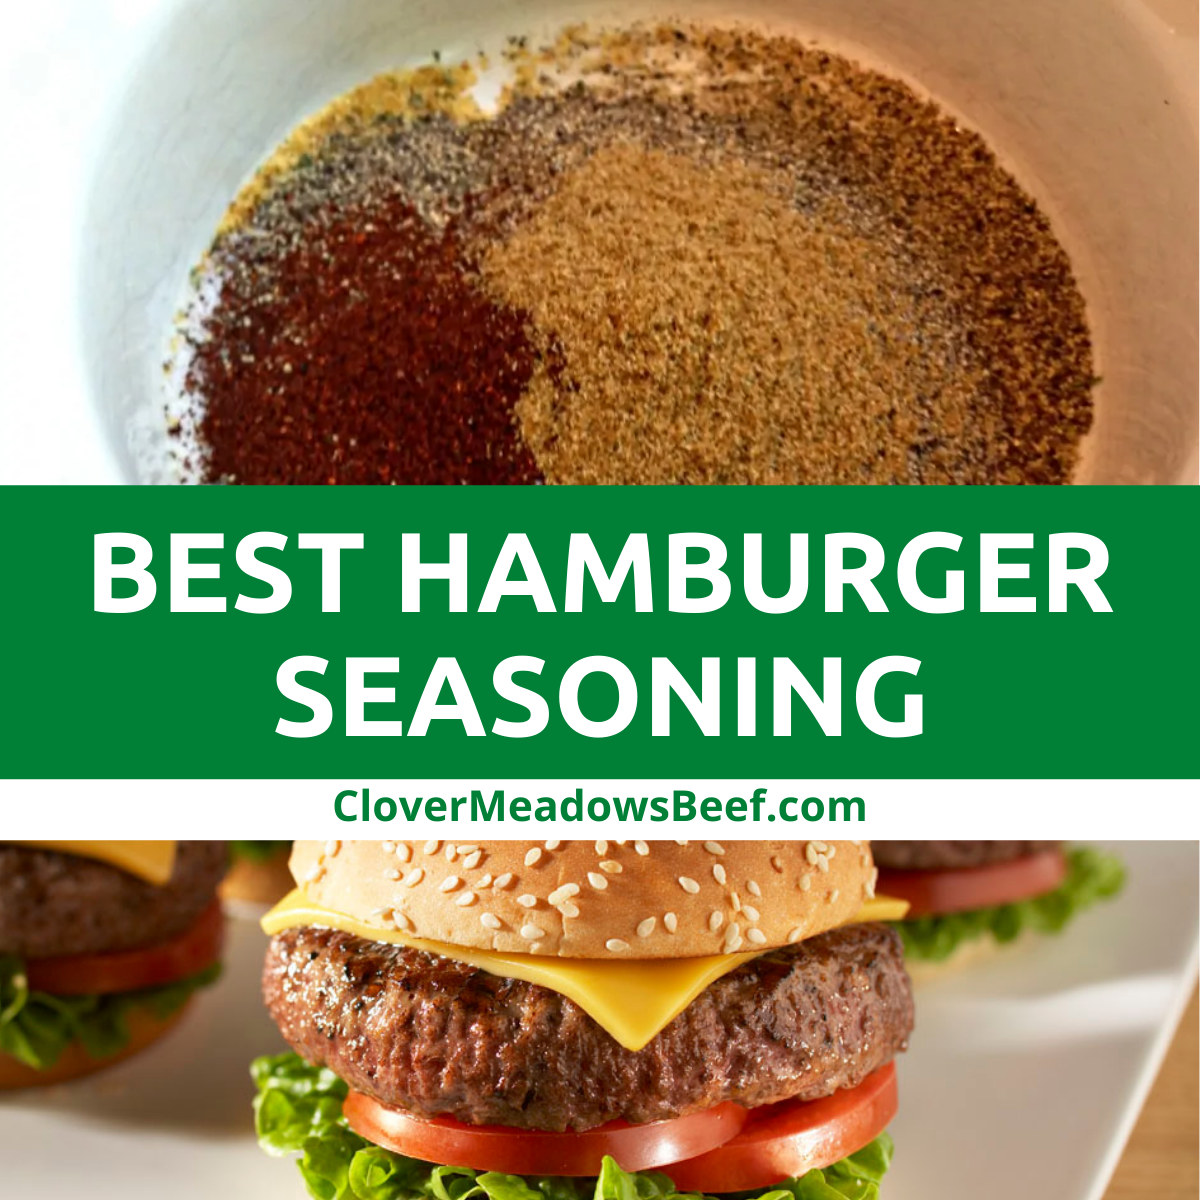 The Best Burger Seasoning